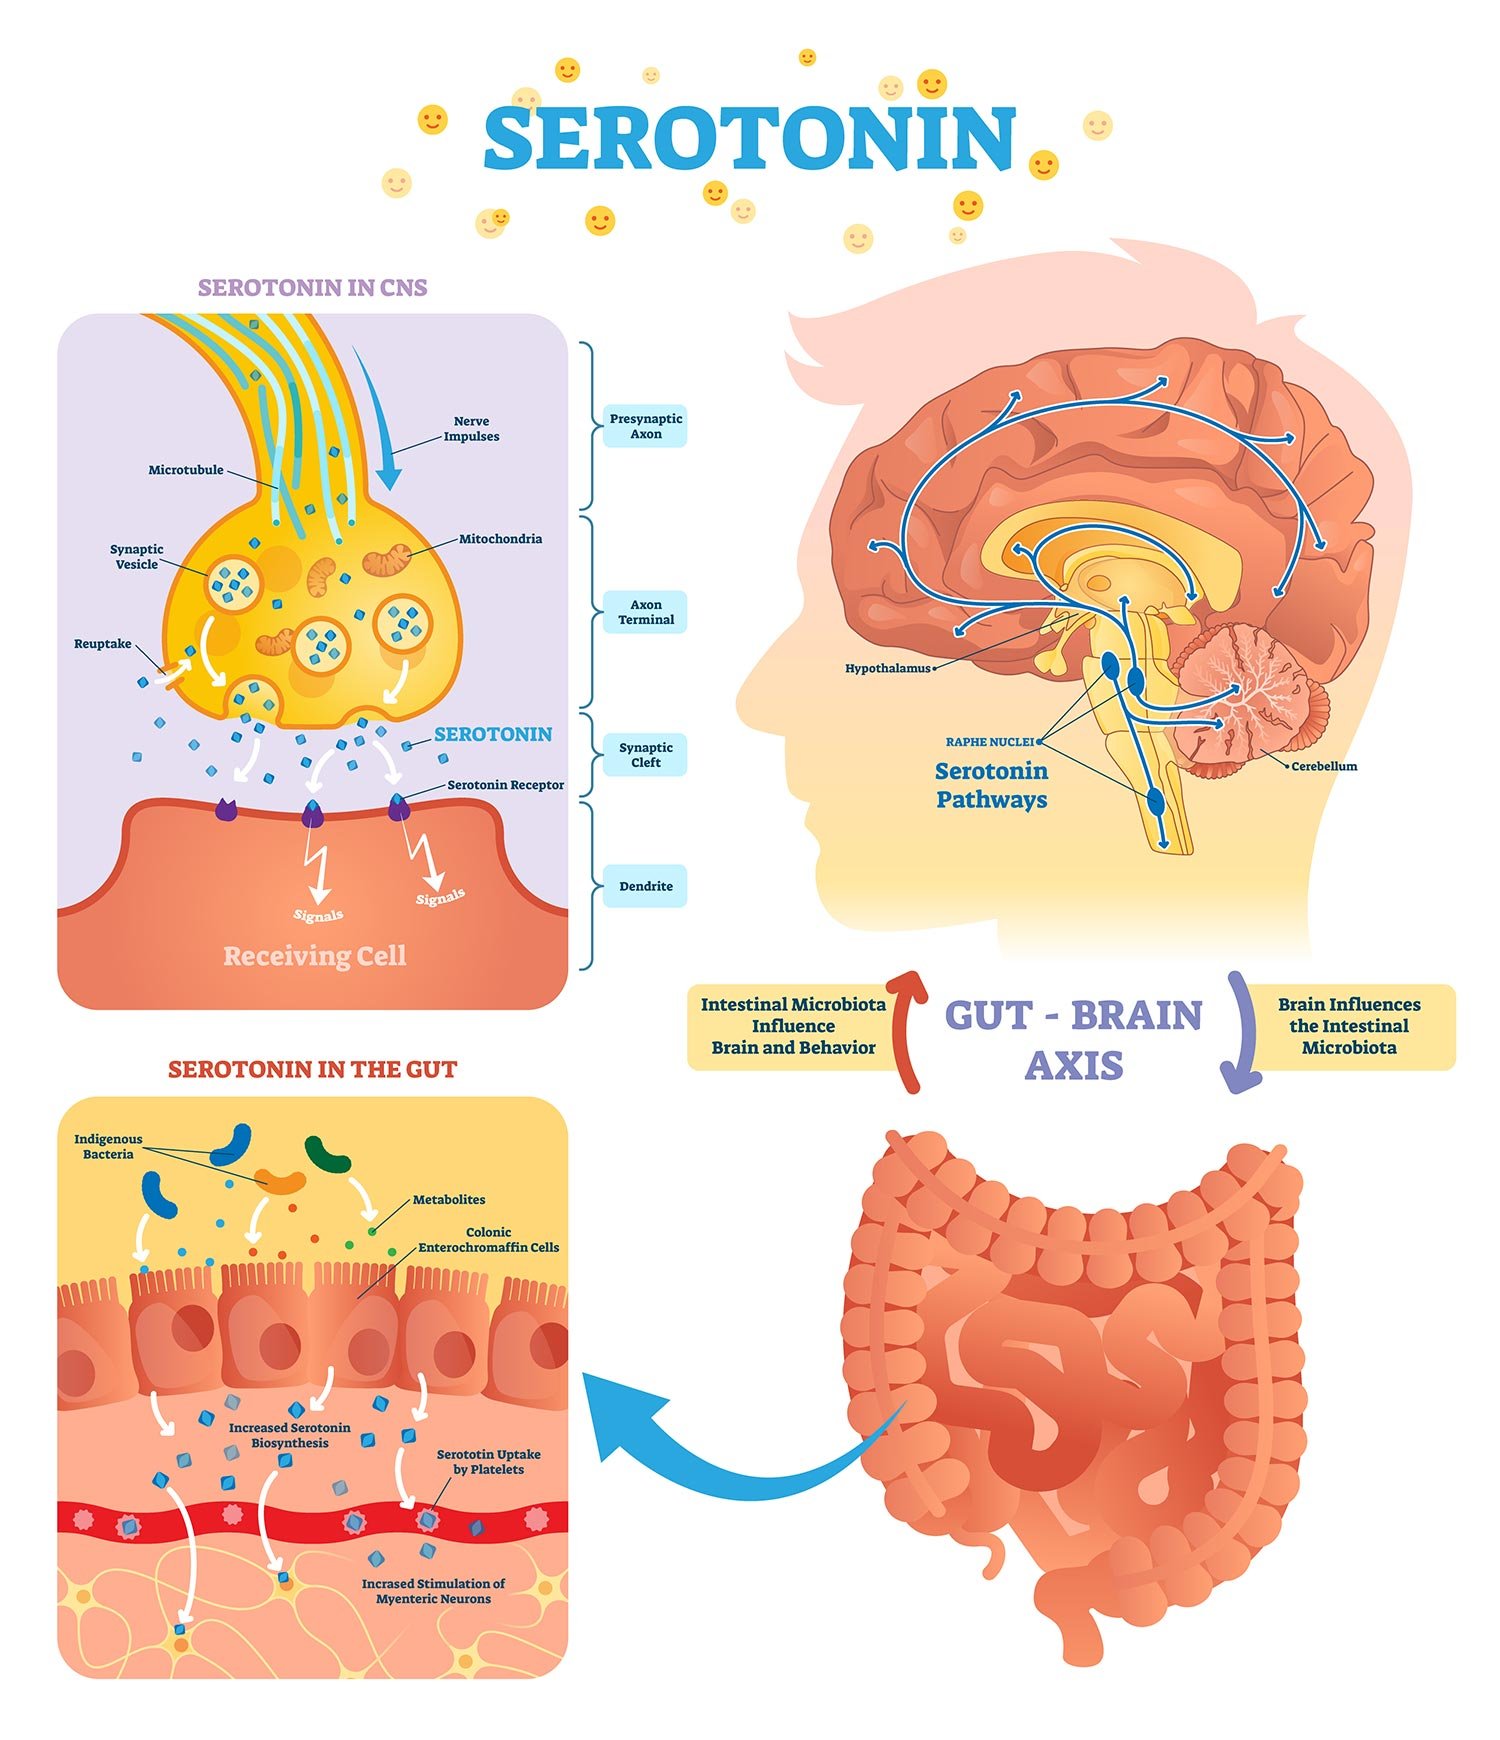 Serotonin is a neurotransmitter